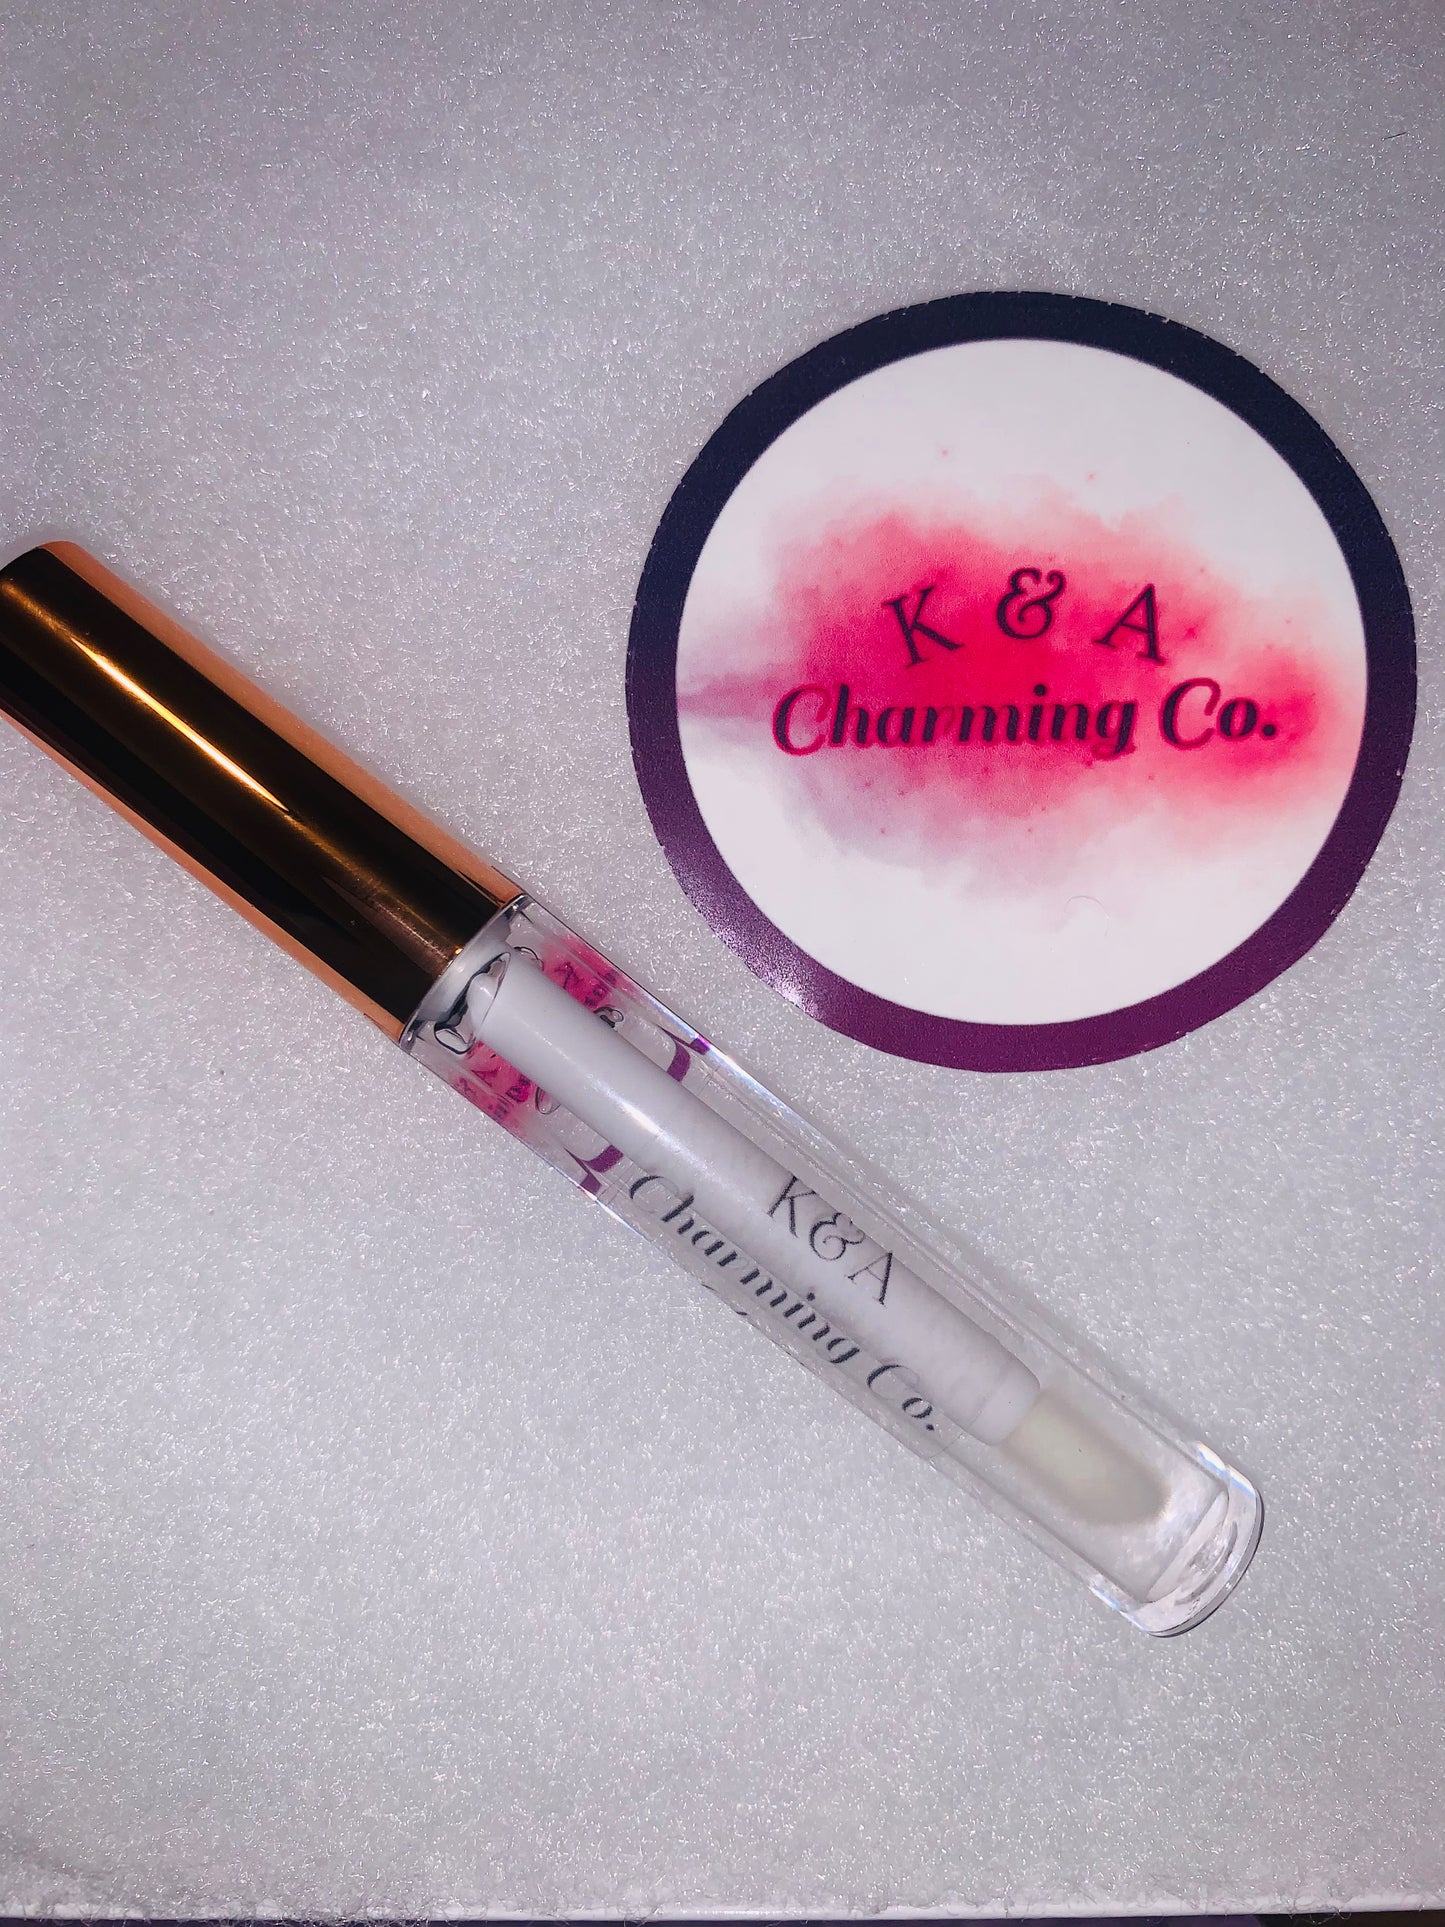 K&A Charming Lip Gloss – K&A Charming Co.